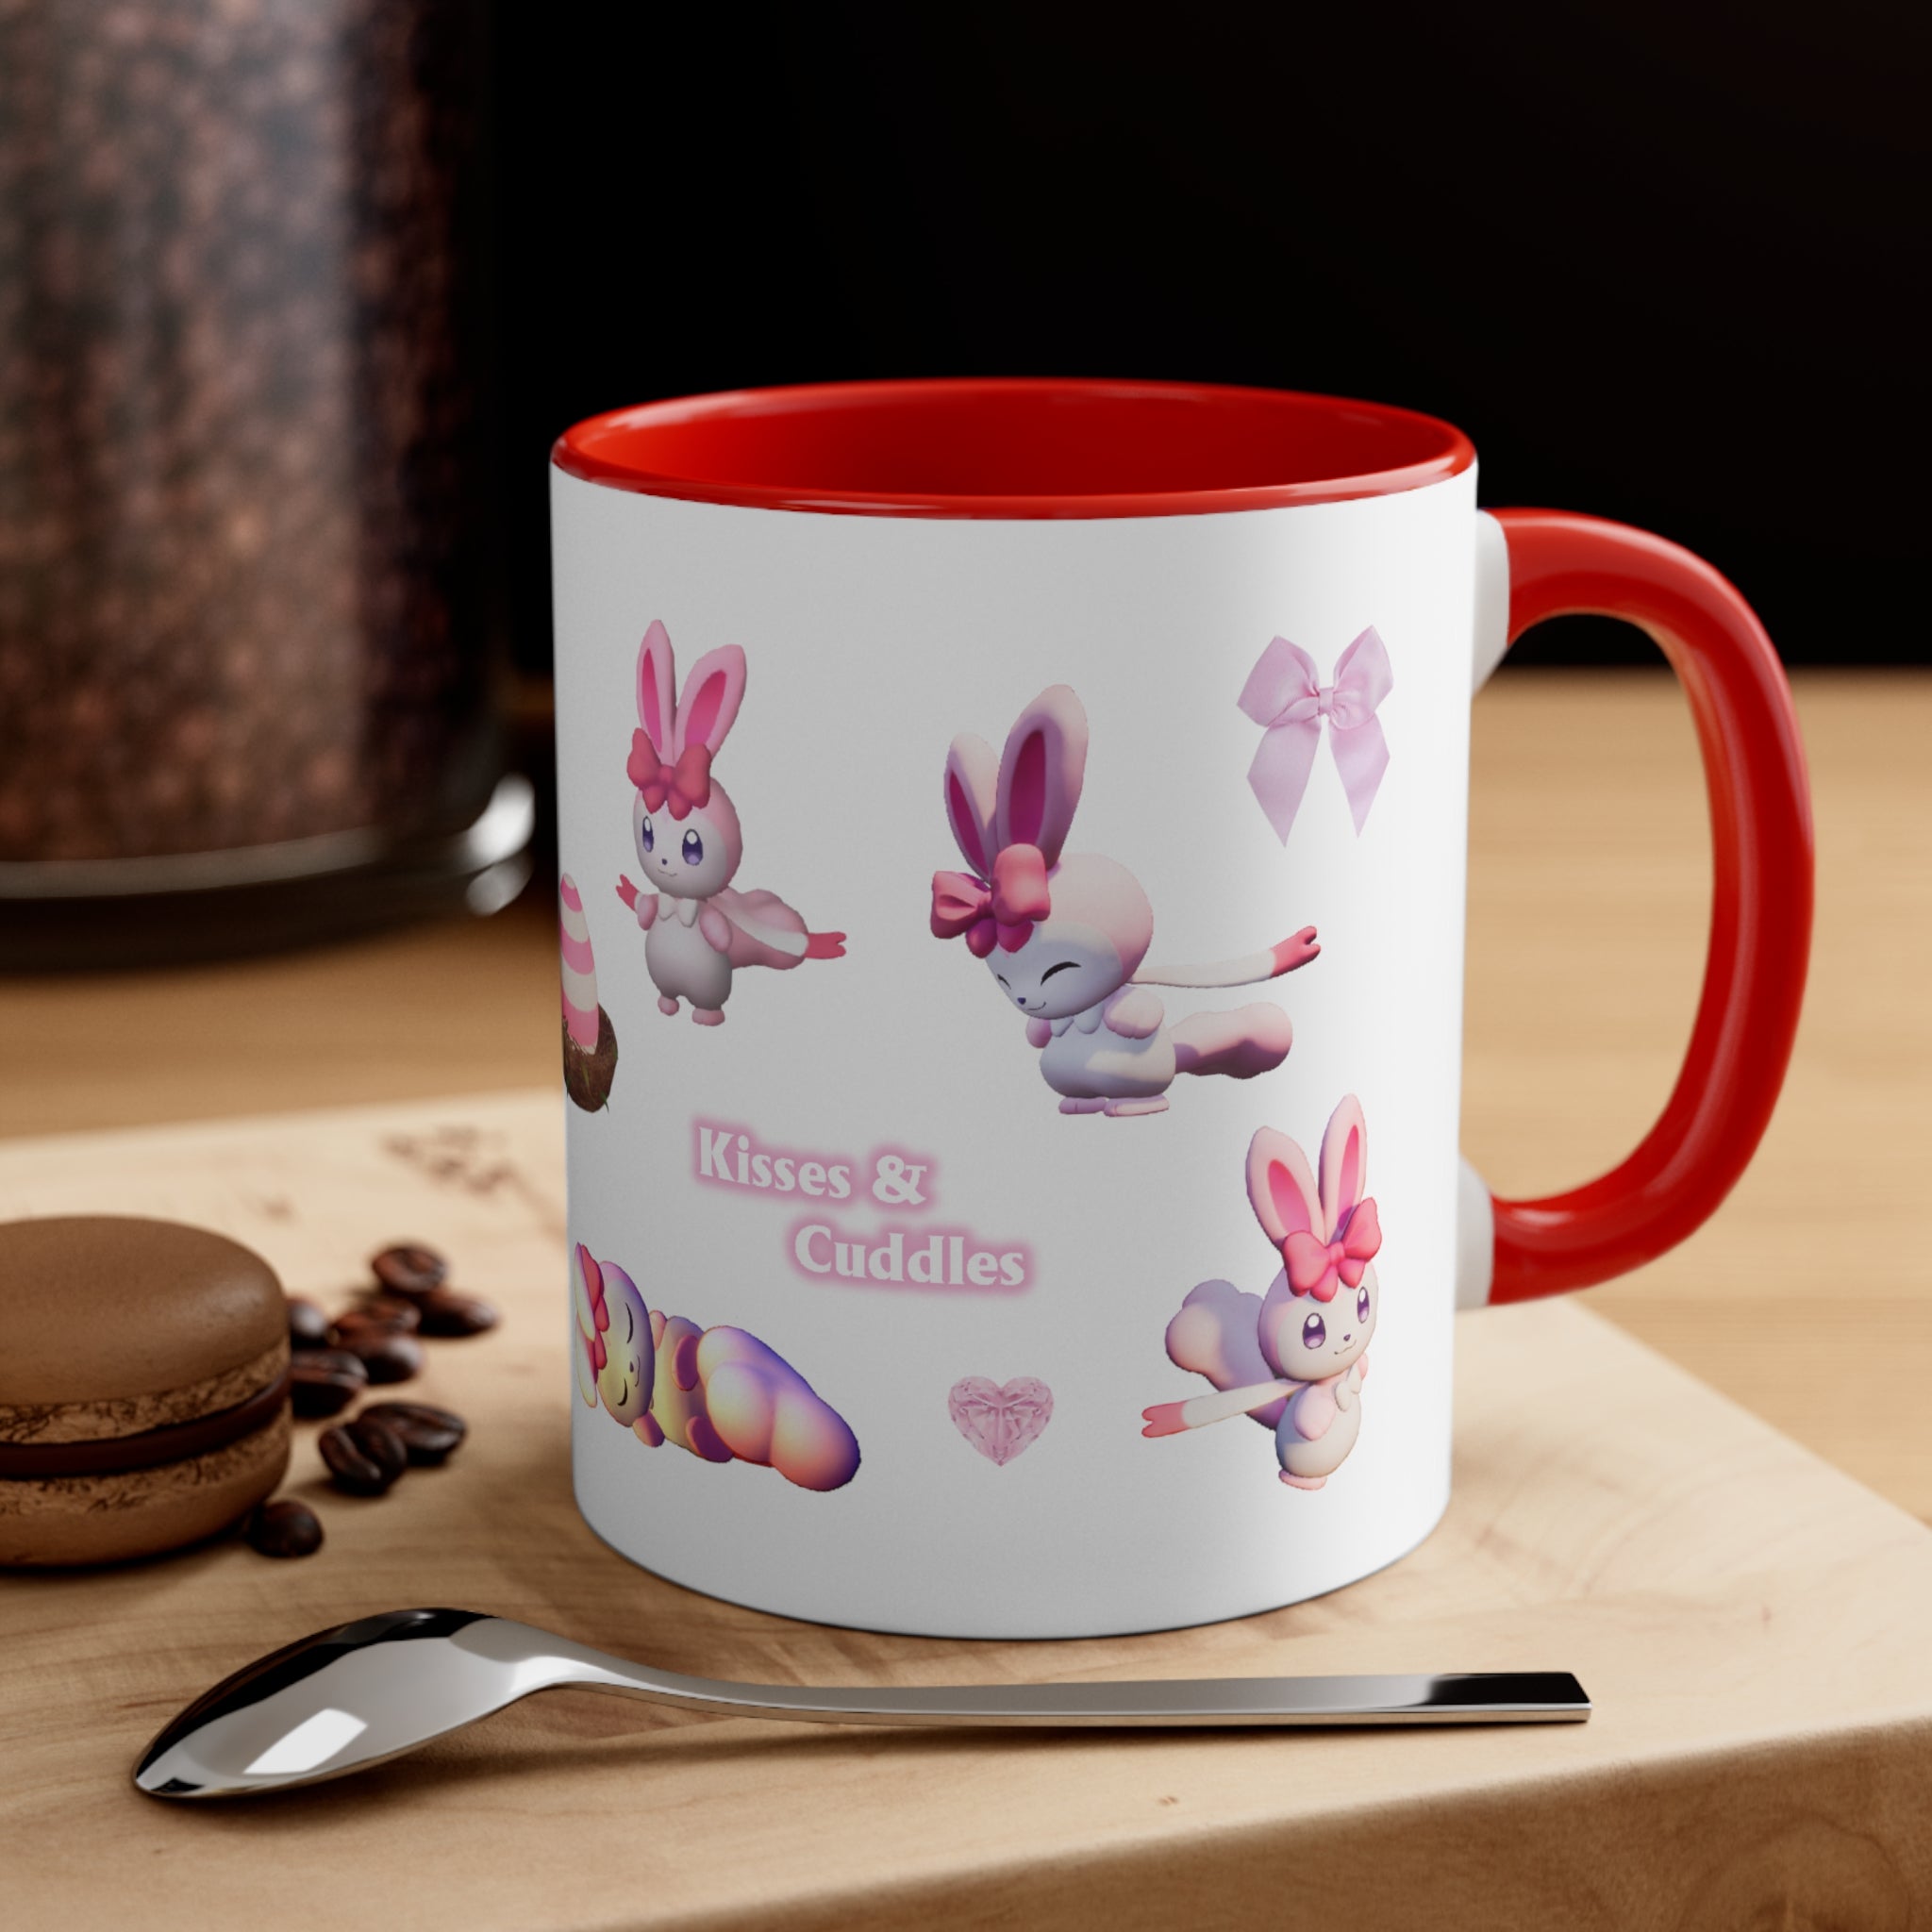 Ribbuny Palworld Accent Coffee Mug, 11oz